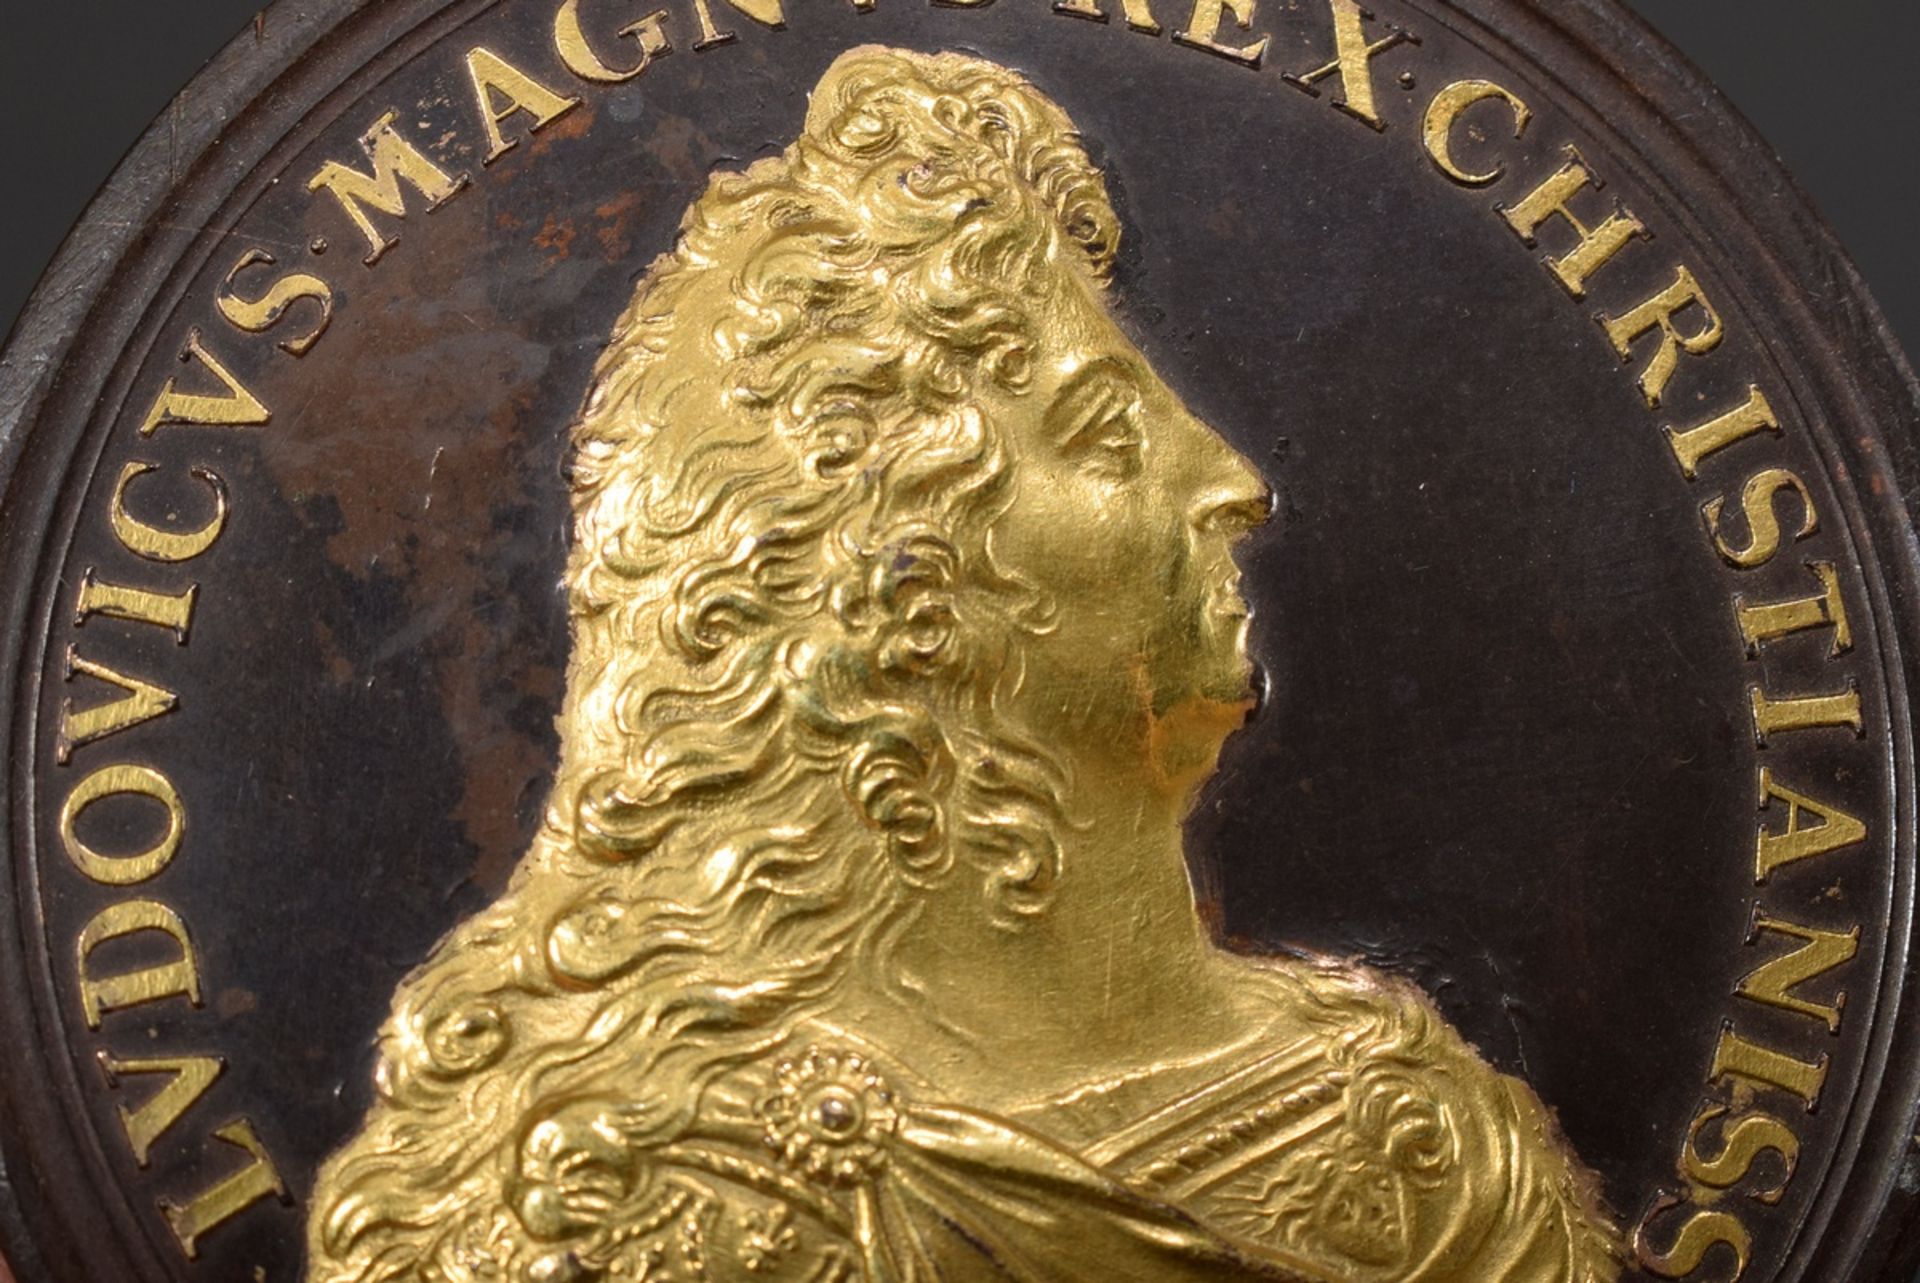 Vergoldete Bronze Medaille "LVDOVICVS MAGNVS REX CHRISTIANISS", verso "AETERNITAS IMPERII GALL", mo - Bild 4 aus 4